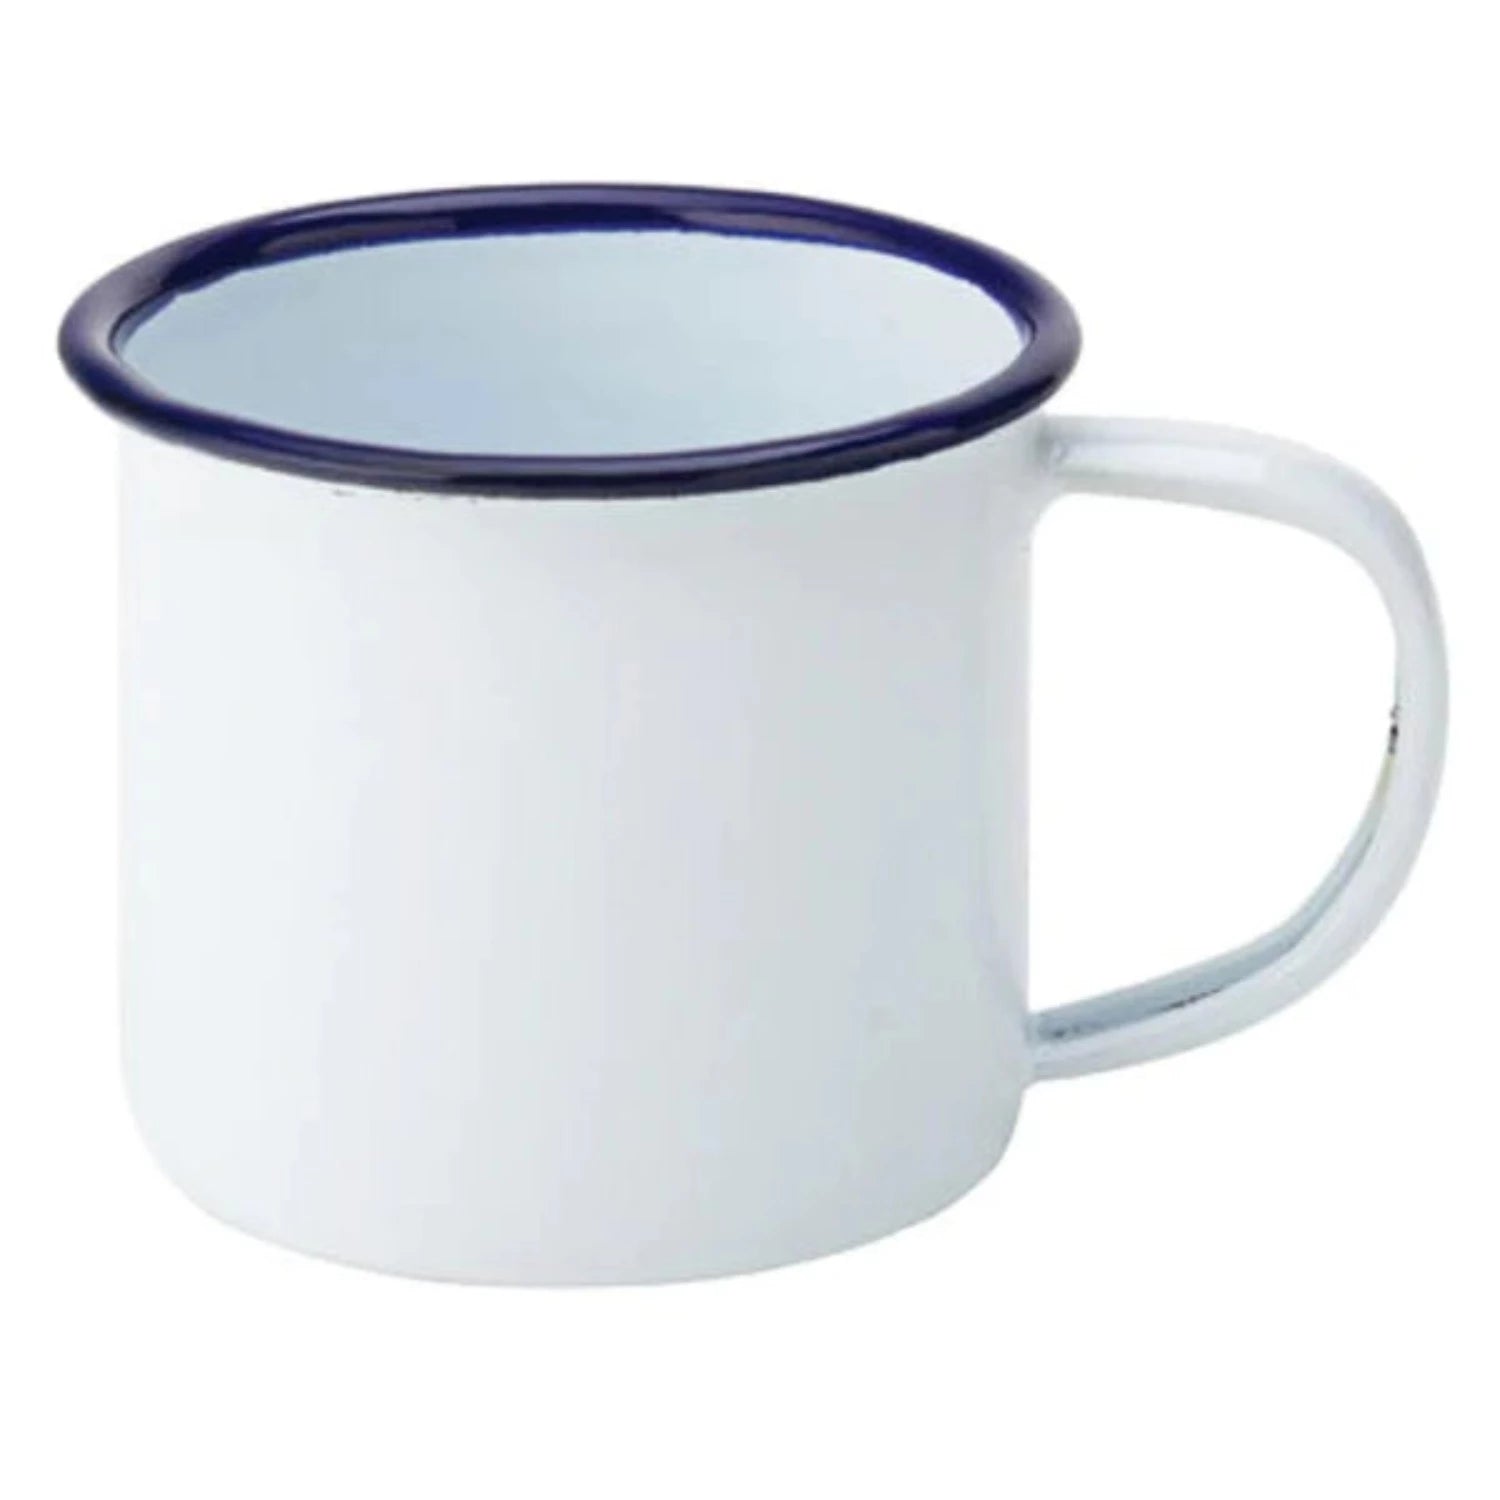 enamel-mug-white-with-blue-rim-36cl/12.5oz-Pack-100